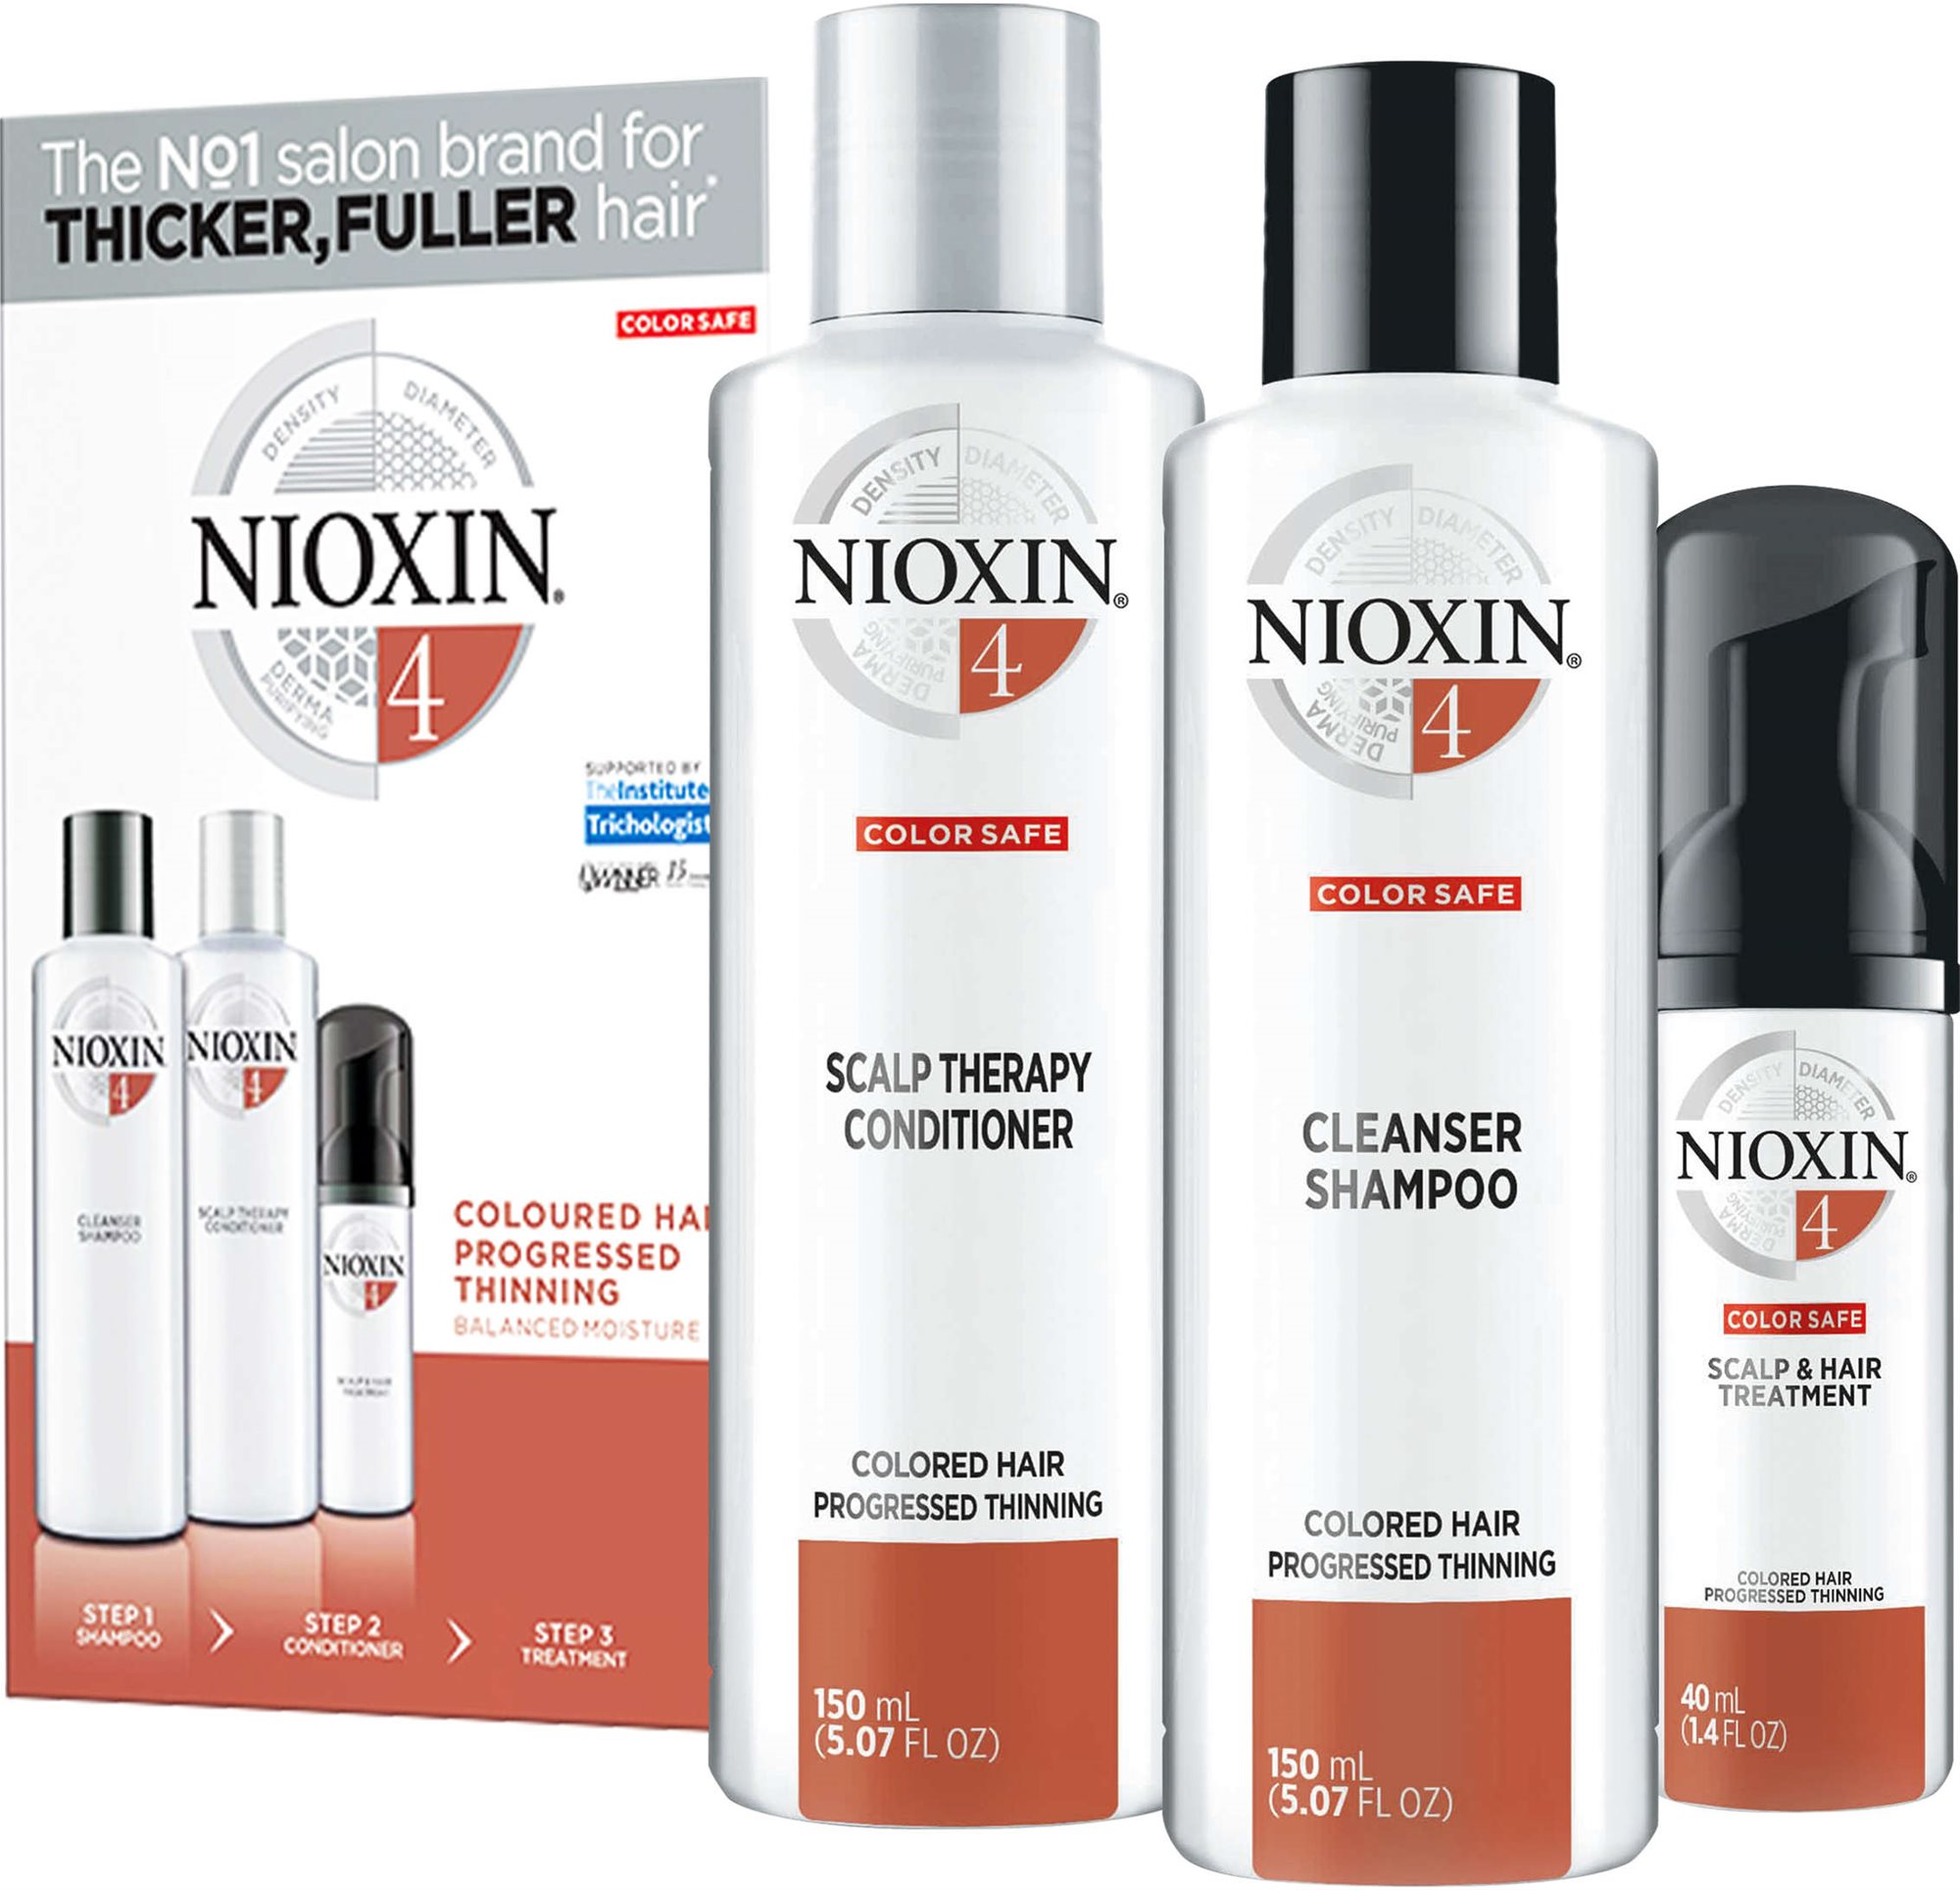 NIOXIN Trial Kit System 4